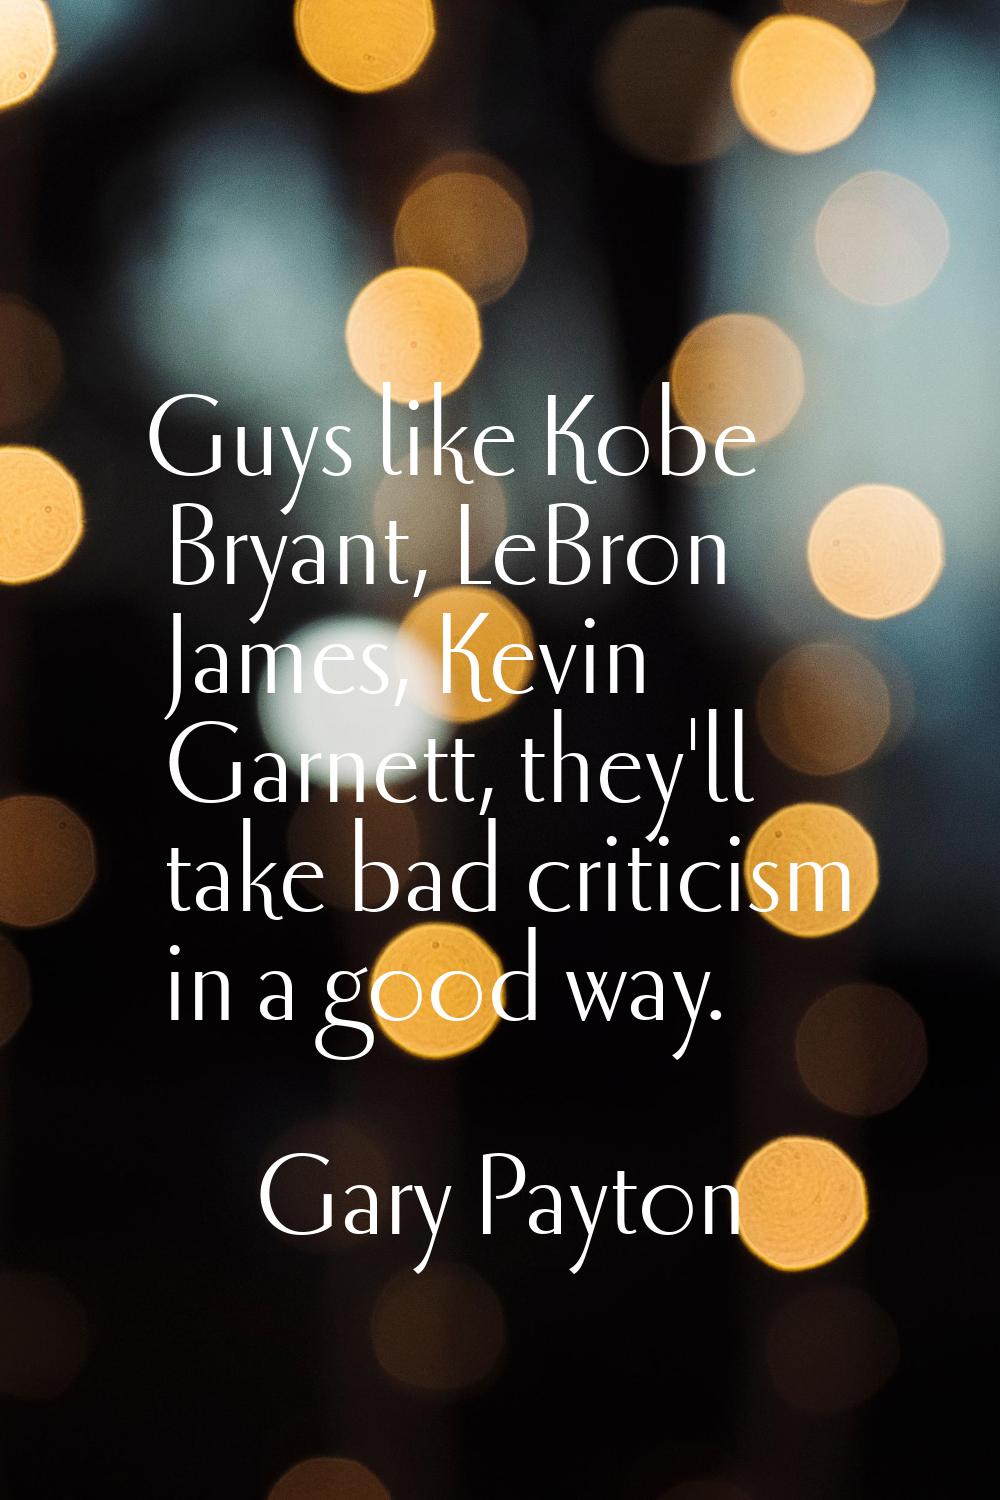 Guys like Kobe Bryant, LeBron James, Kevin Garnett, they'll take bad criticism in a good way.